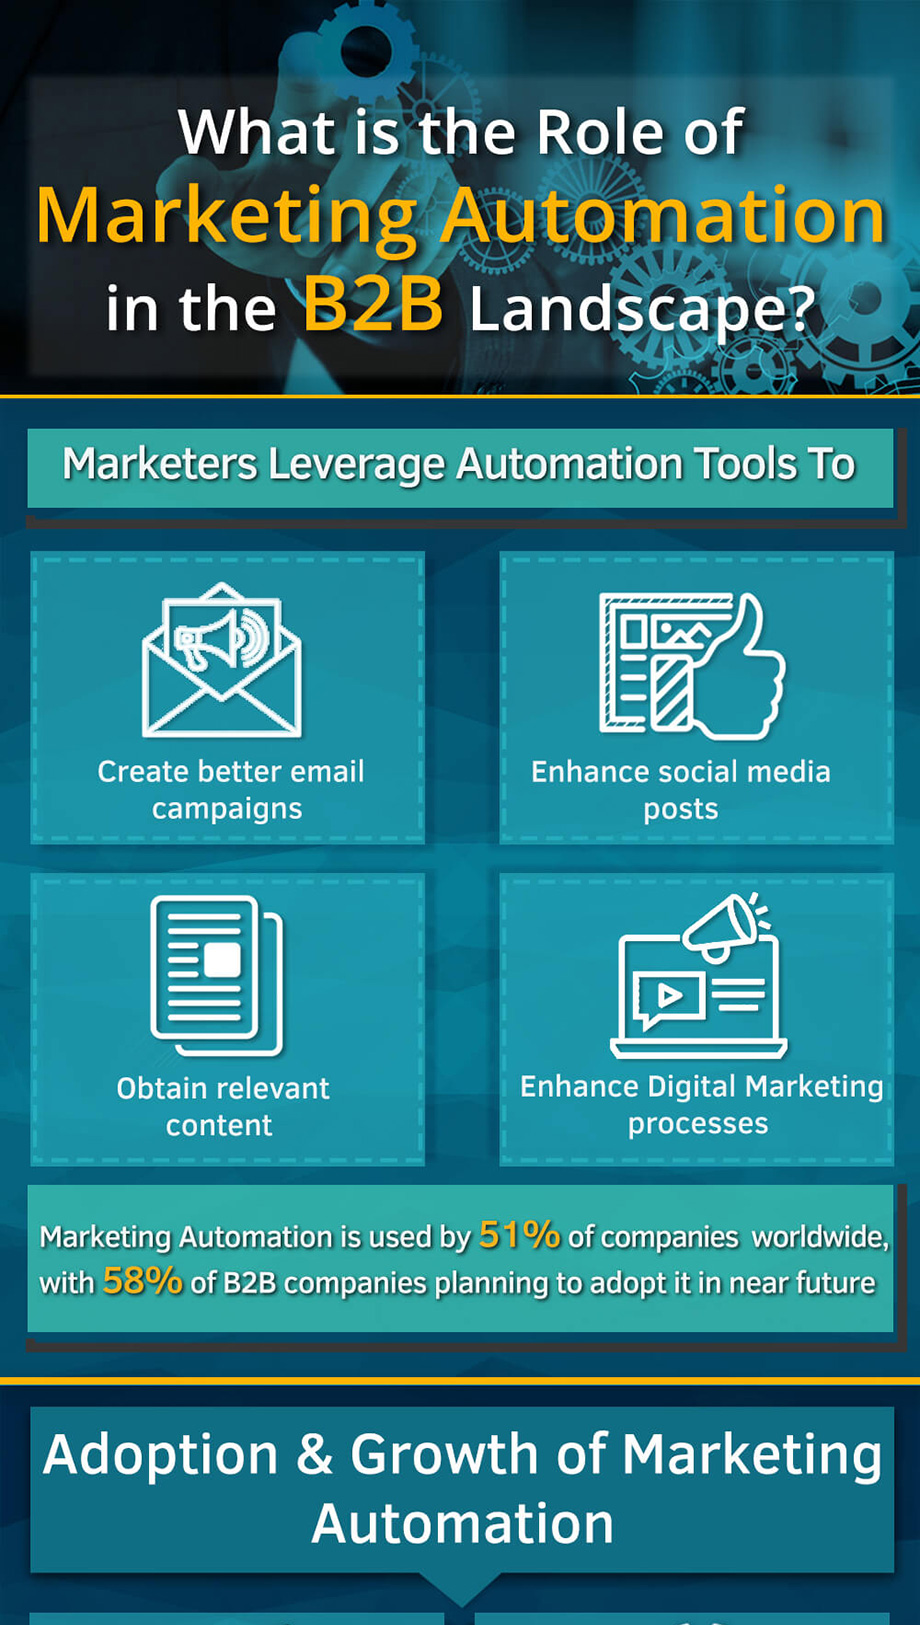 b2b-marketing-automation-role-infographic-1